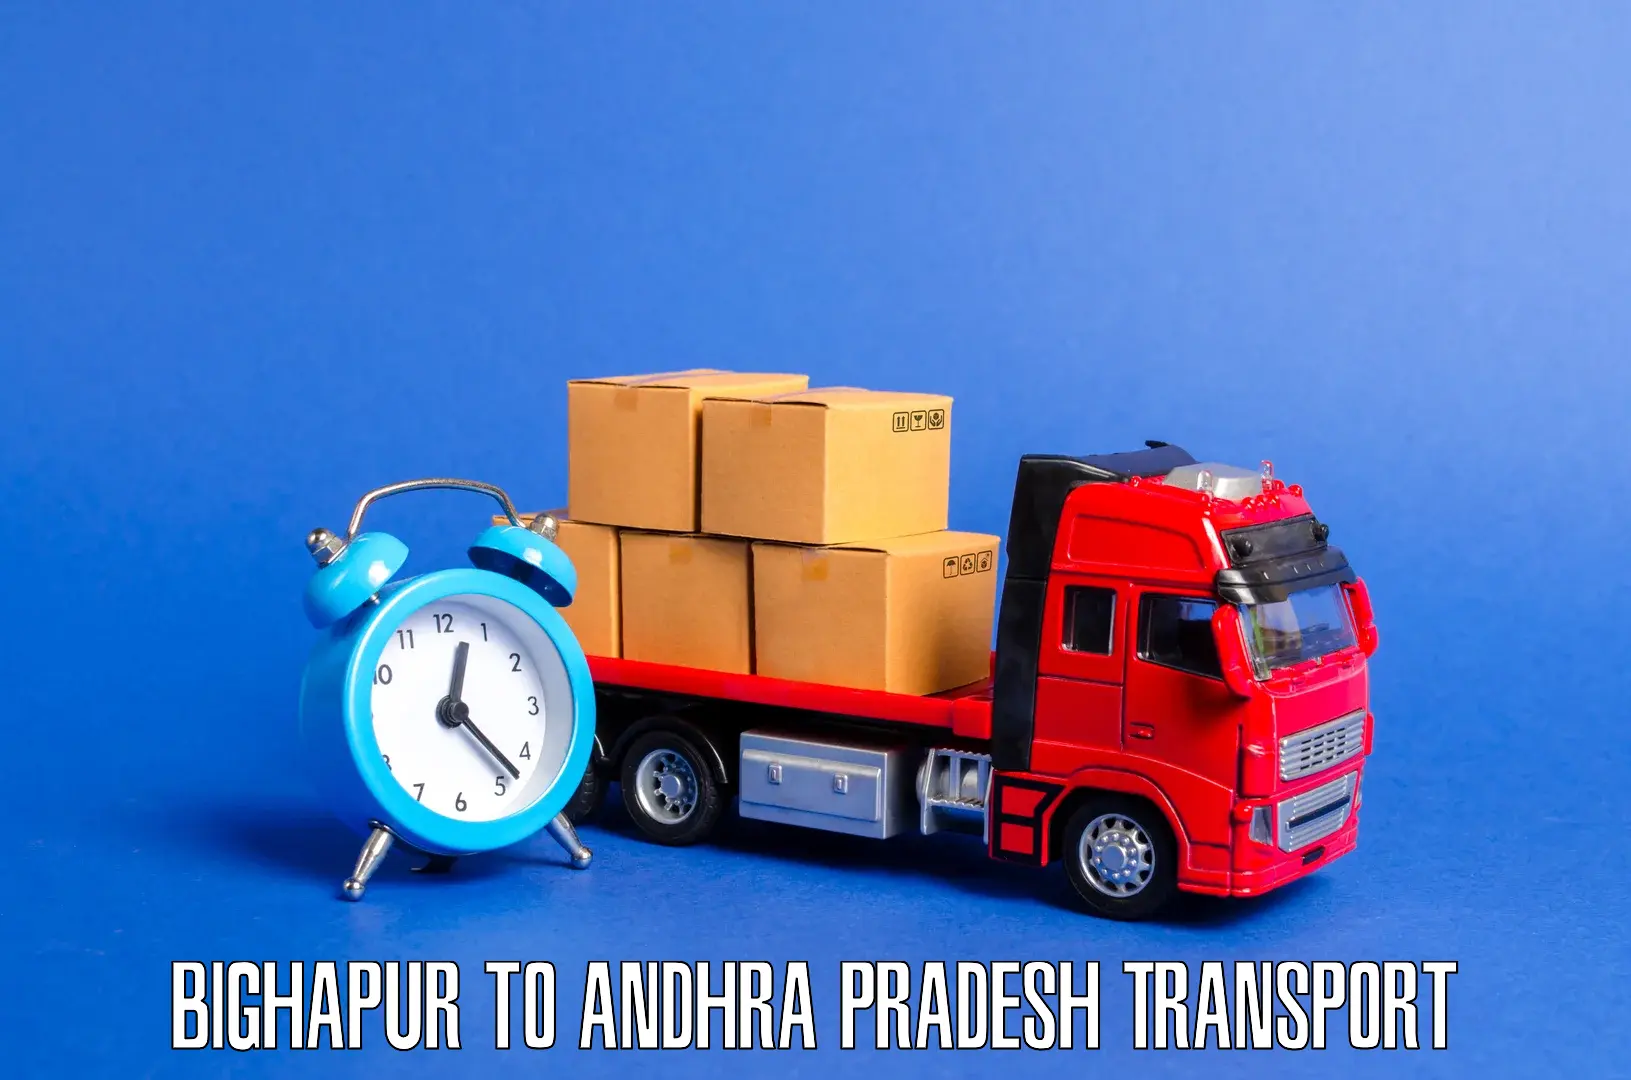 Delivery service Bighapur to Kadapa